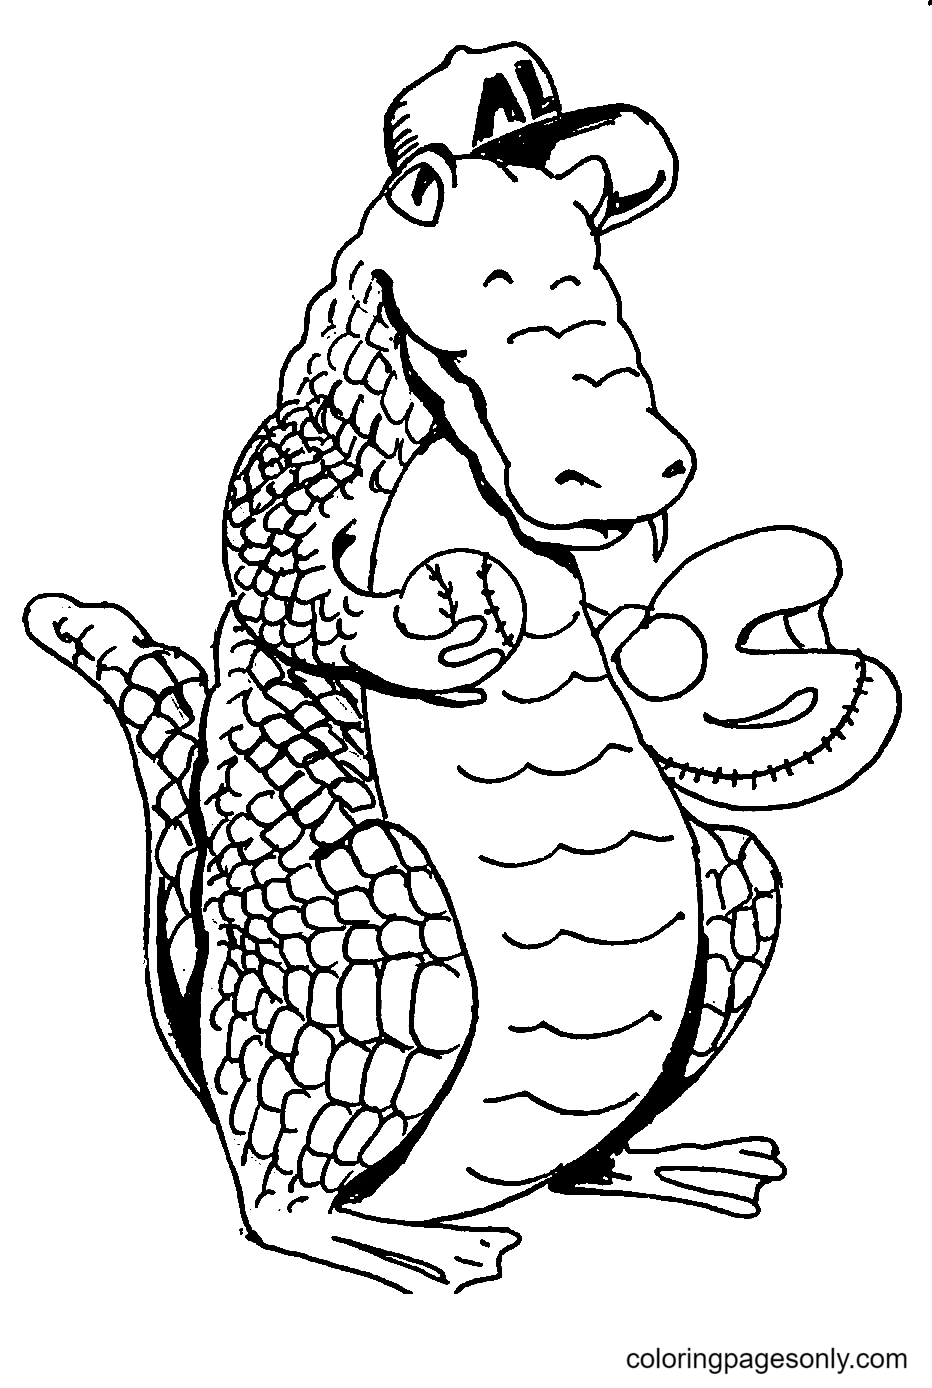 Cartoon Alligator Baseballer Coloring Page